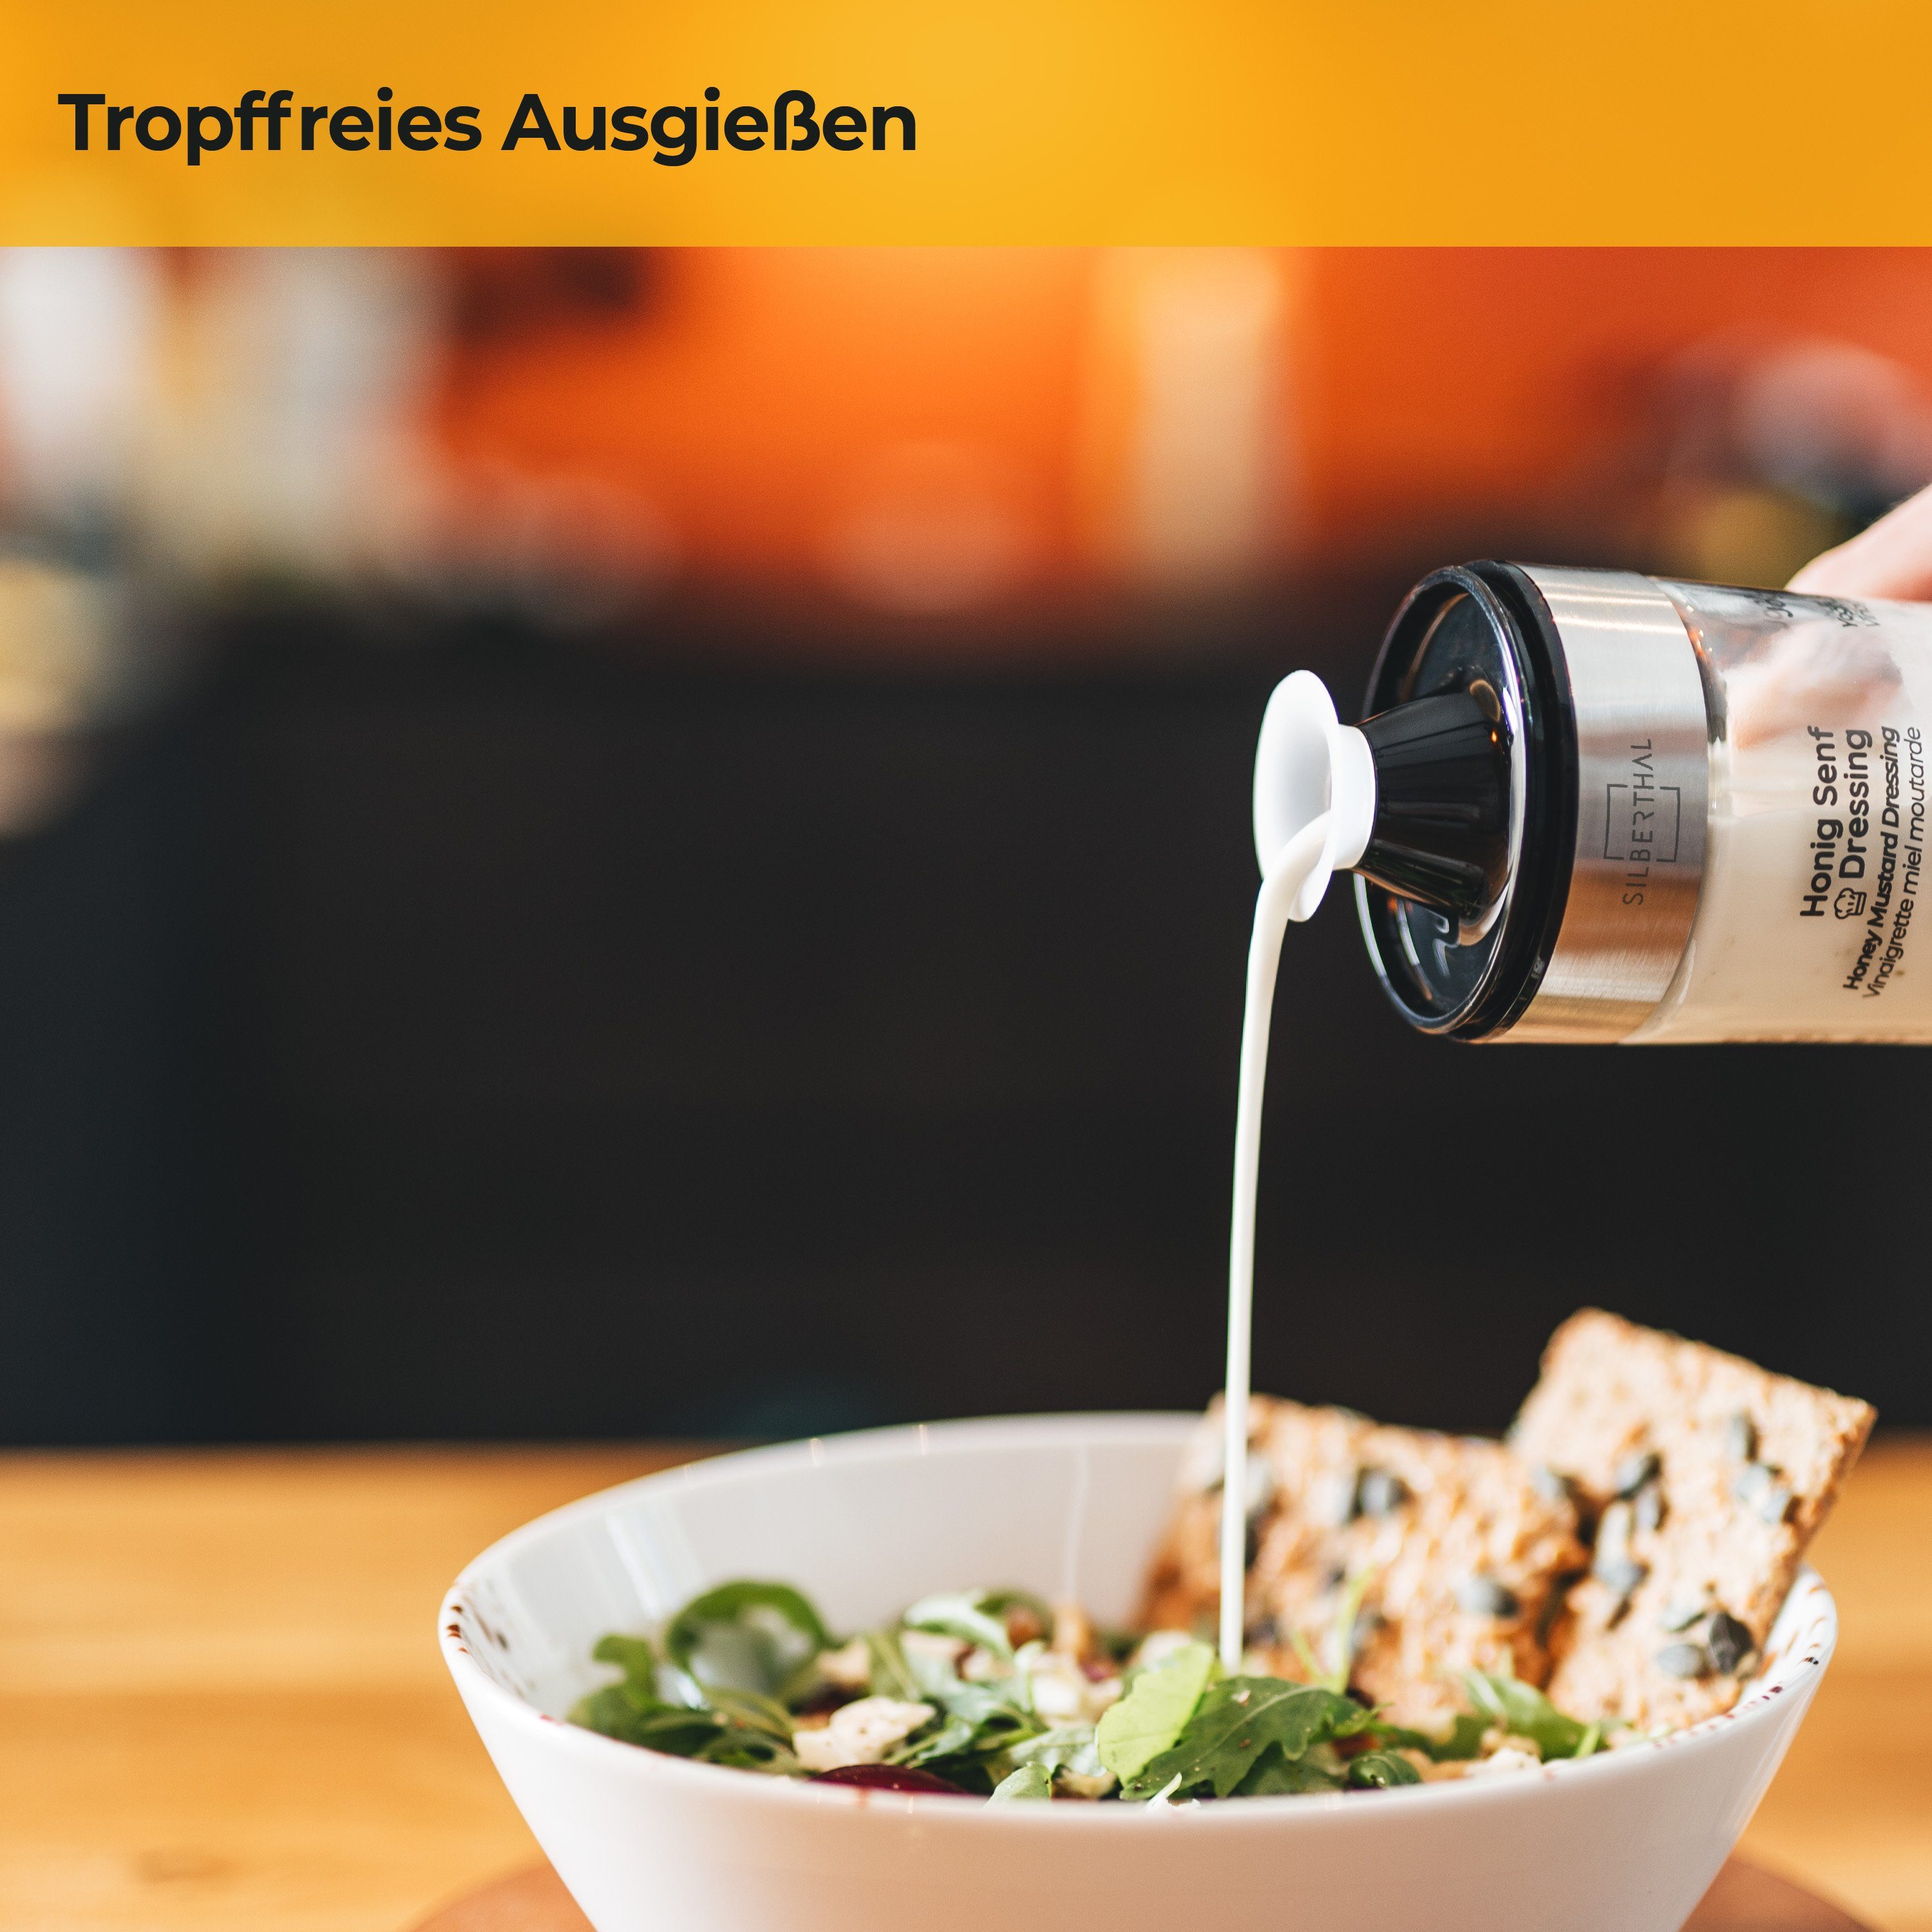 Salatsaucen integrierter perfekt Salatdressing Behälter Rezepten, SILBERTHAL Glas, zum Shaker Mitnehmen 500ml mit mit Dressing Shaker Skala,